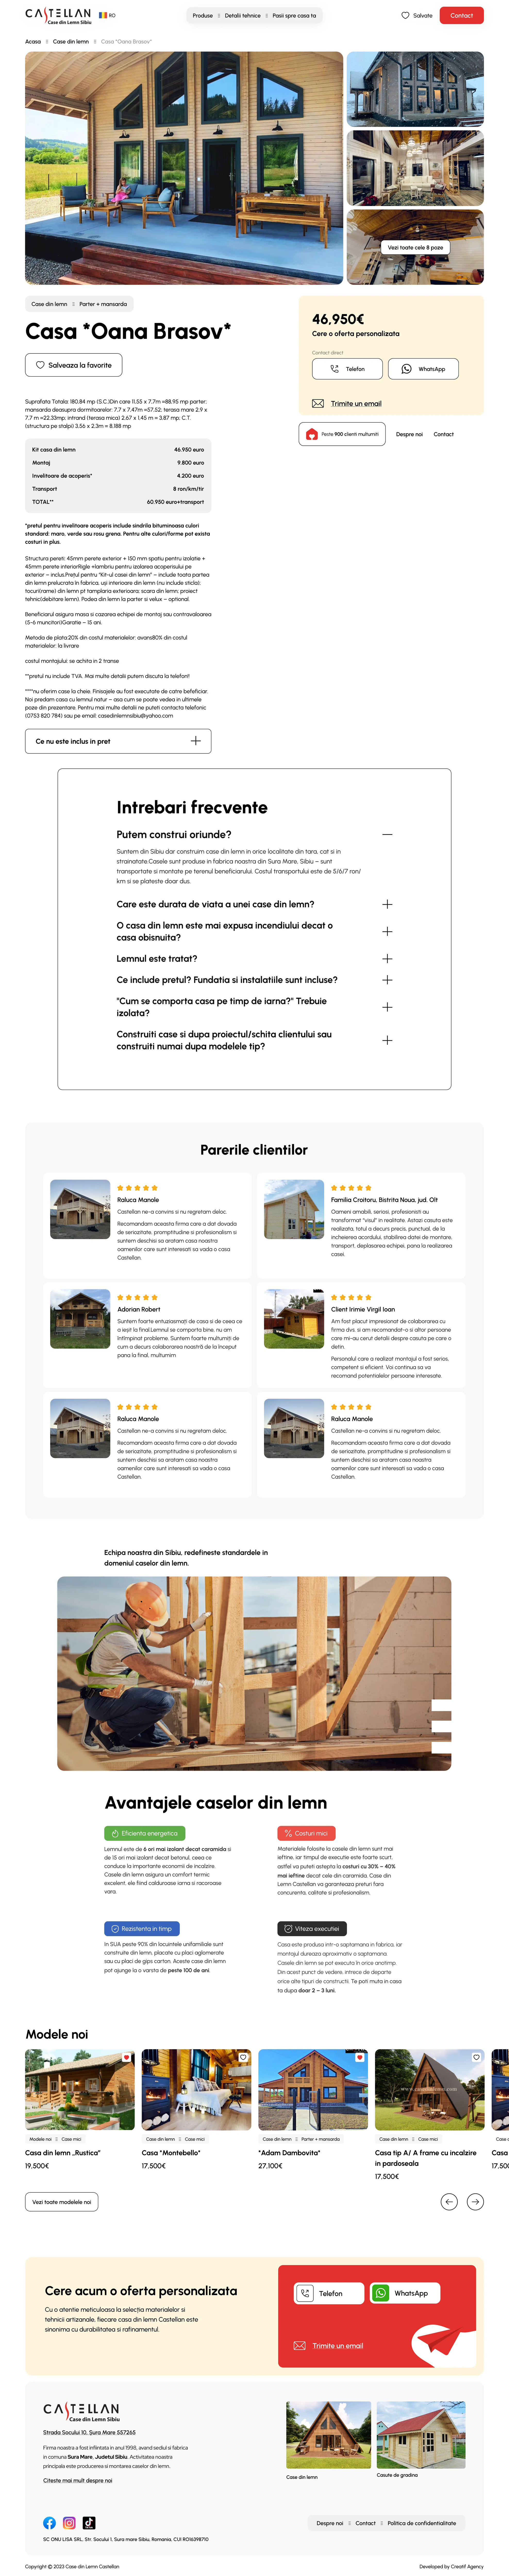 properties listing web design